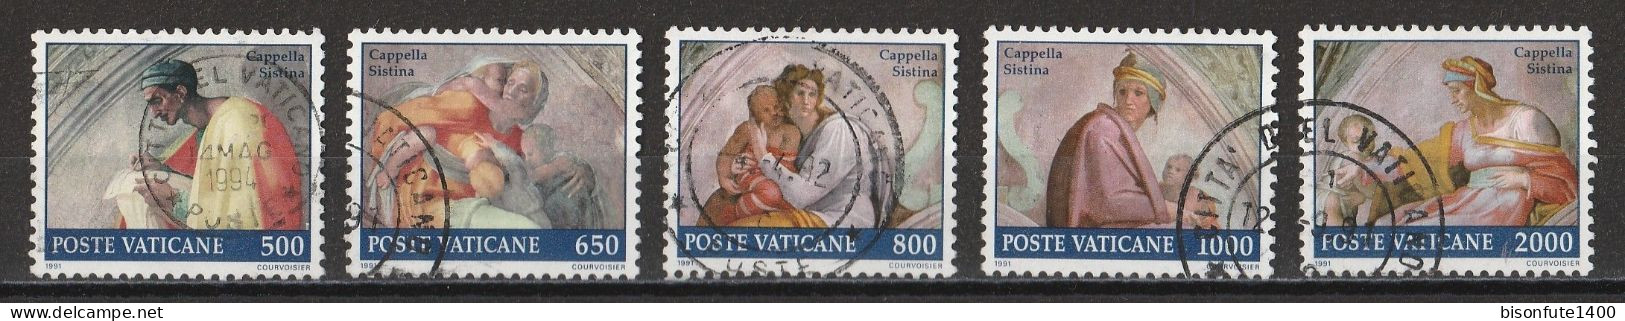 Vatican 1991 : Timbres Yvert & Tellier N° 891 - 892 - 893 - 894 - 895 - 897 - 898 - 899 - 900 Et 901 Oblitérés. - Usati